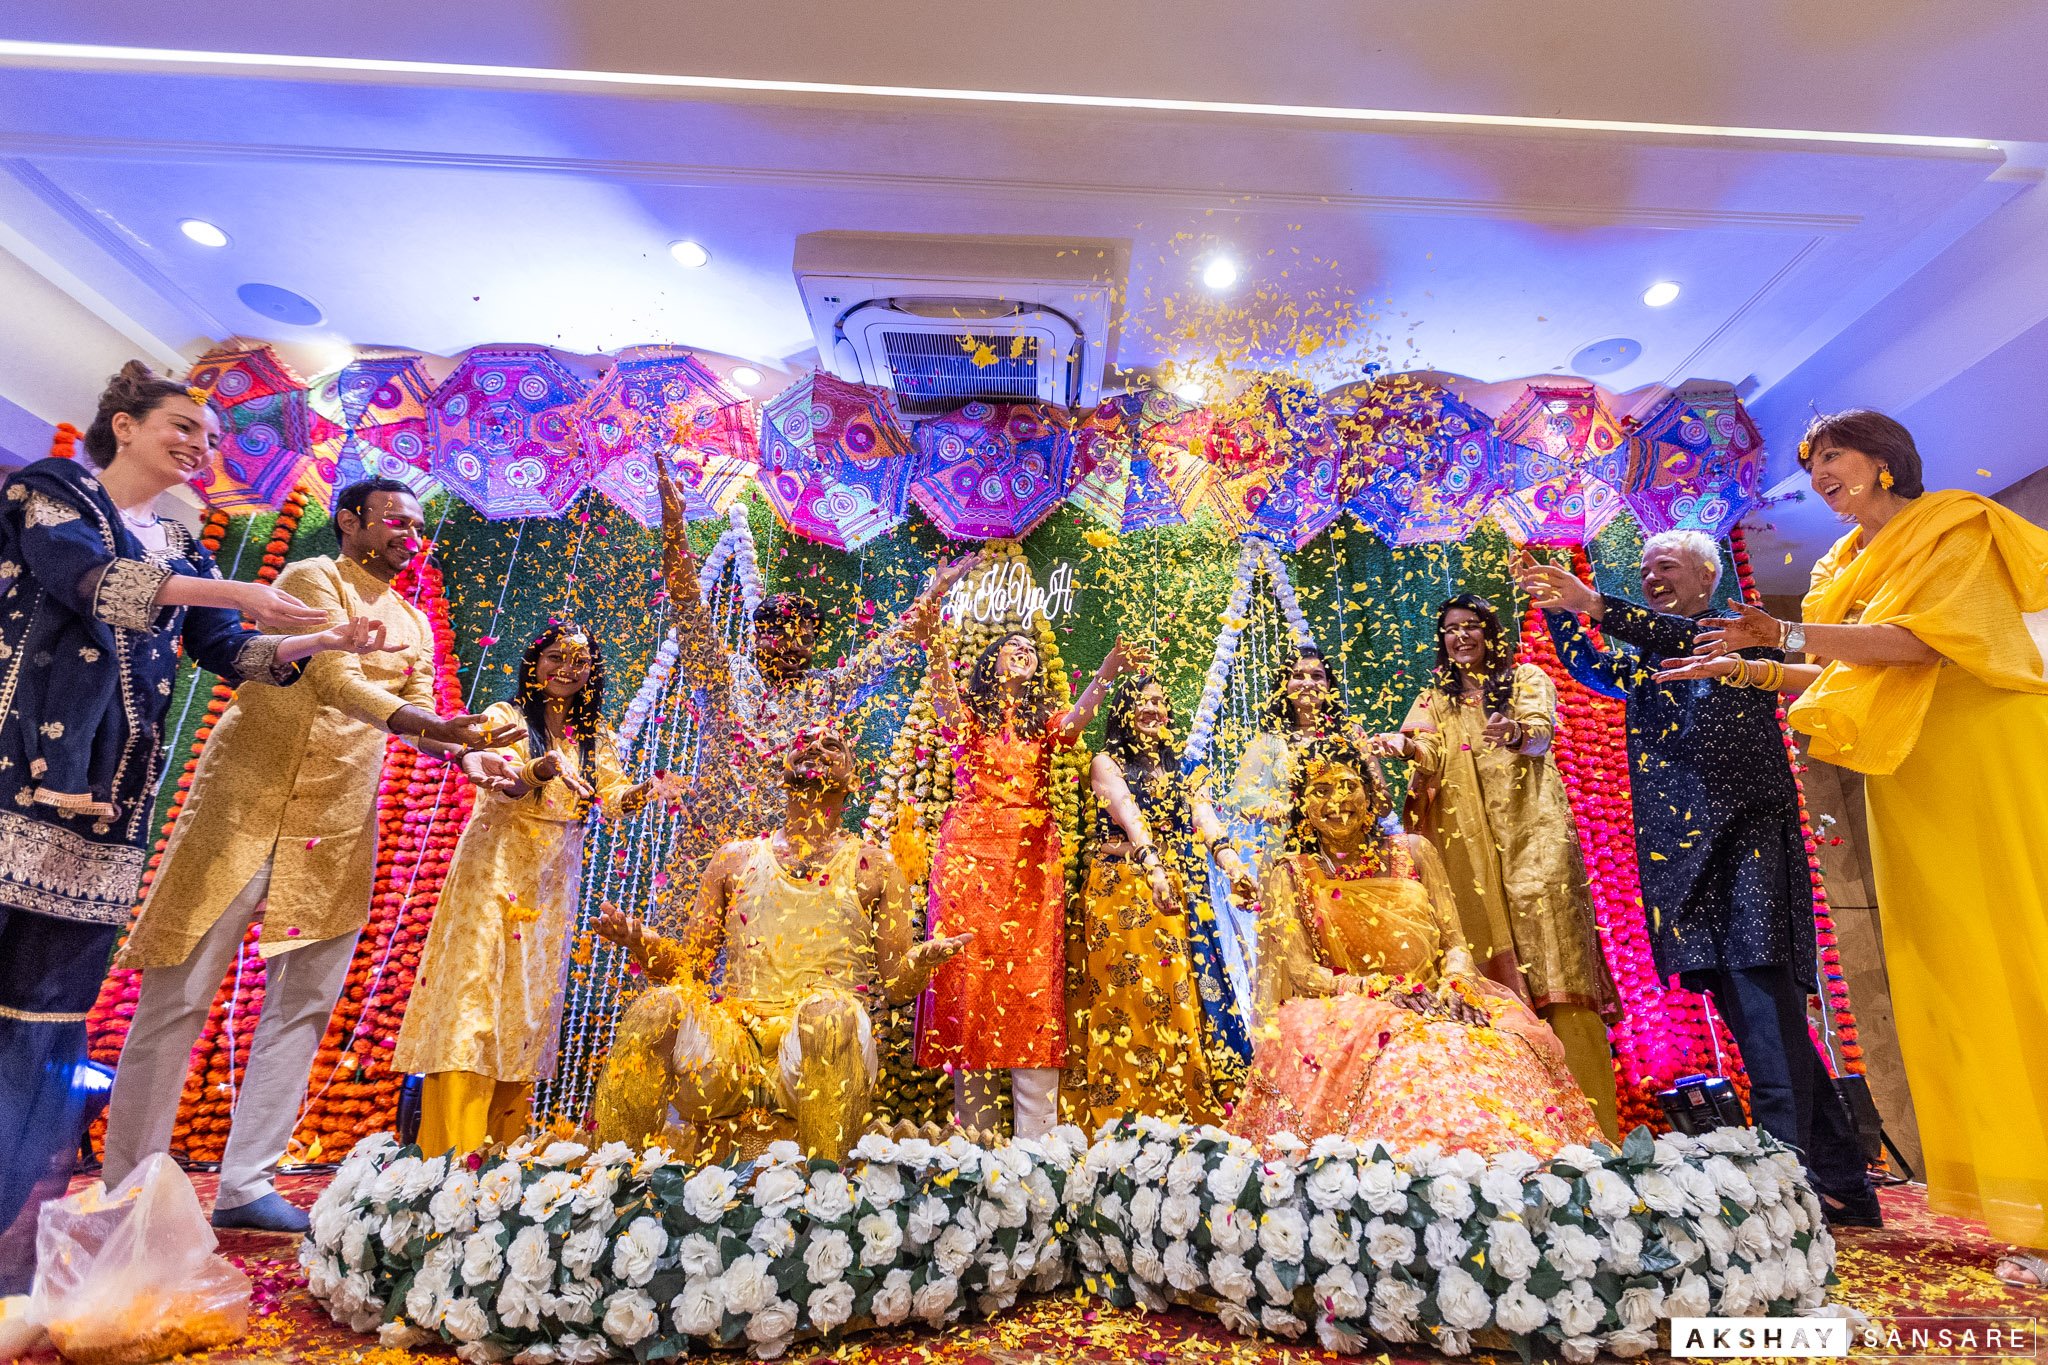 Lipika x Bhavya Compress Akshay Sansare Photography & Films Best wedding photographers in mumbai india-28.jpg